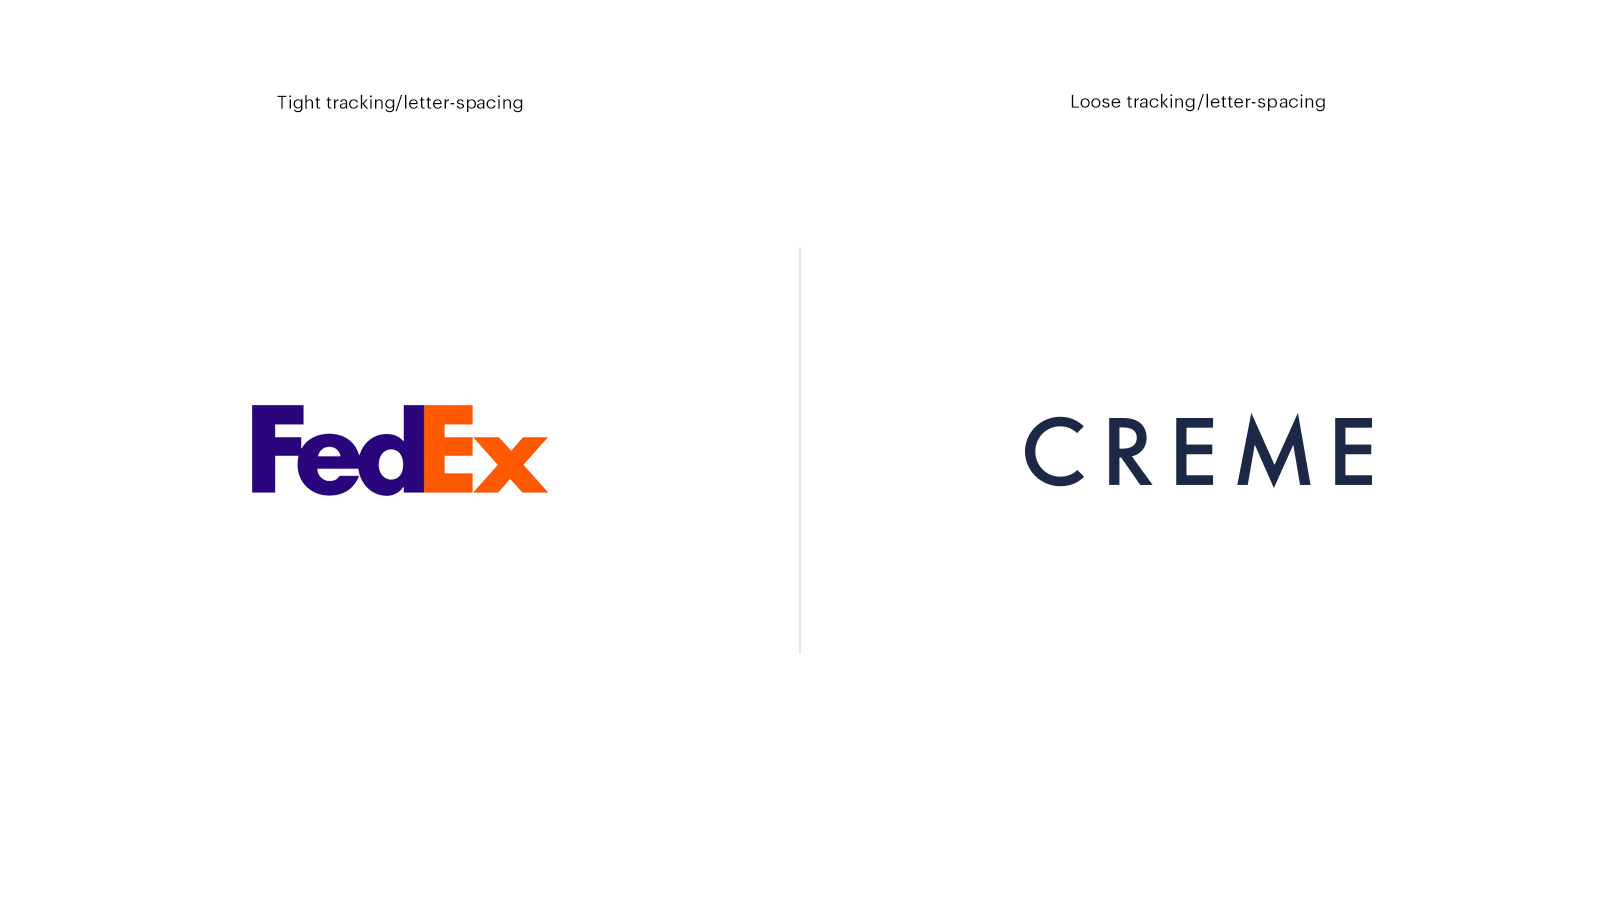 FedEx logo vs. Creme logo